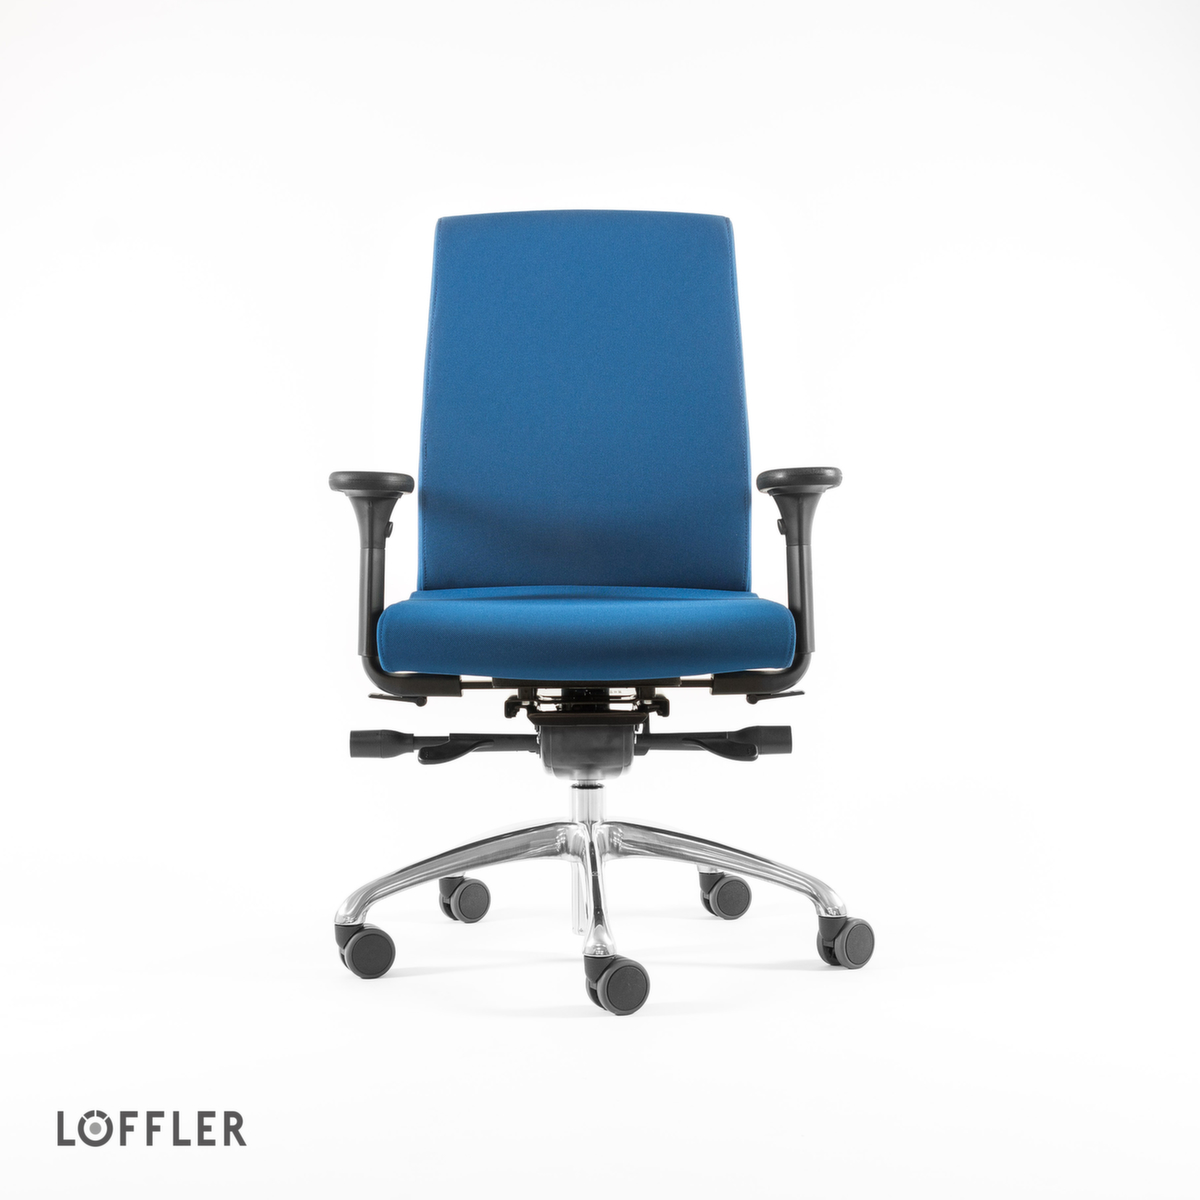 Löffler Drehstuhl Figo, blau Standard 2 ZOOM